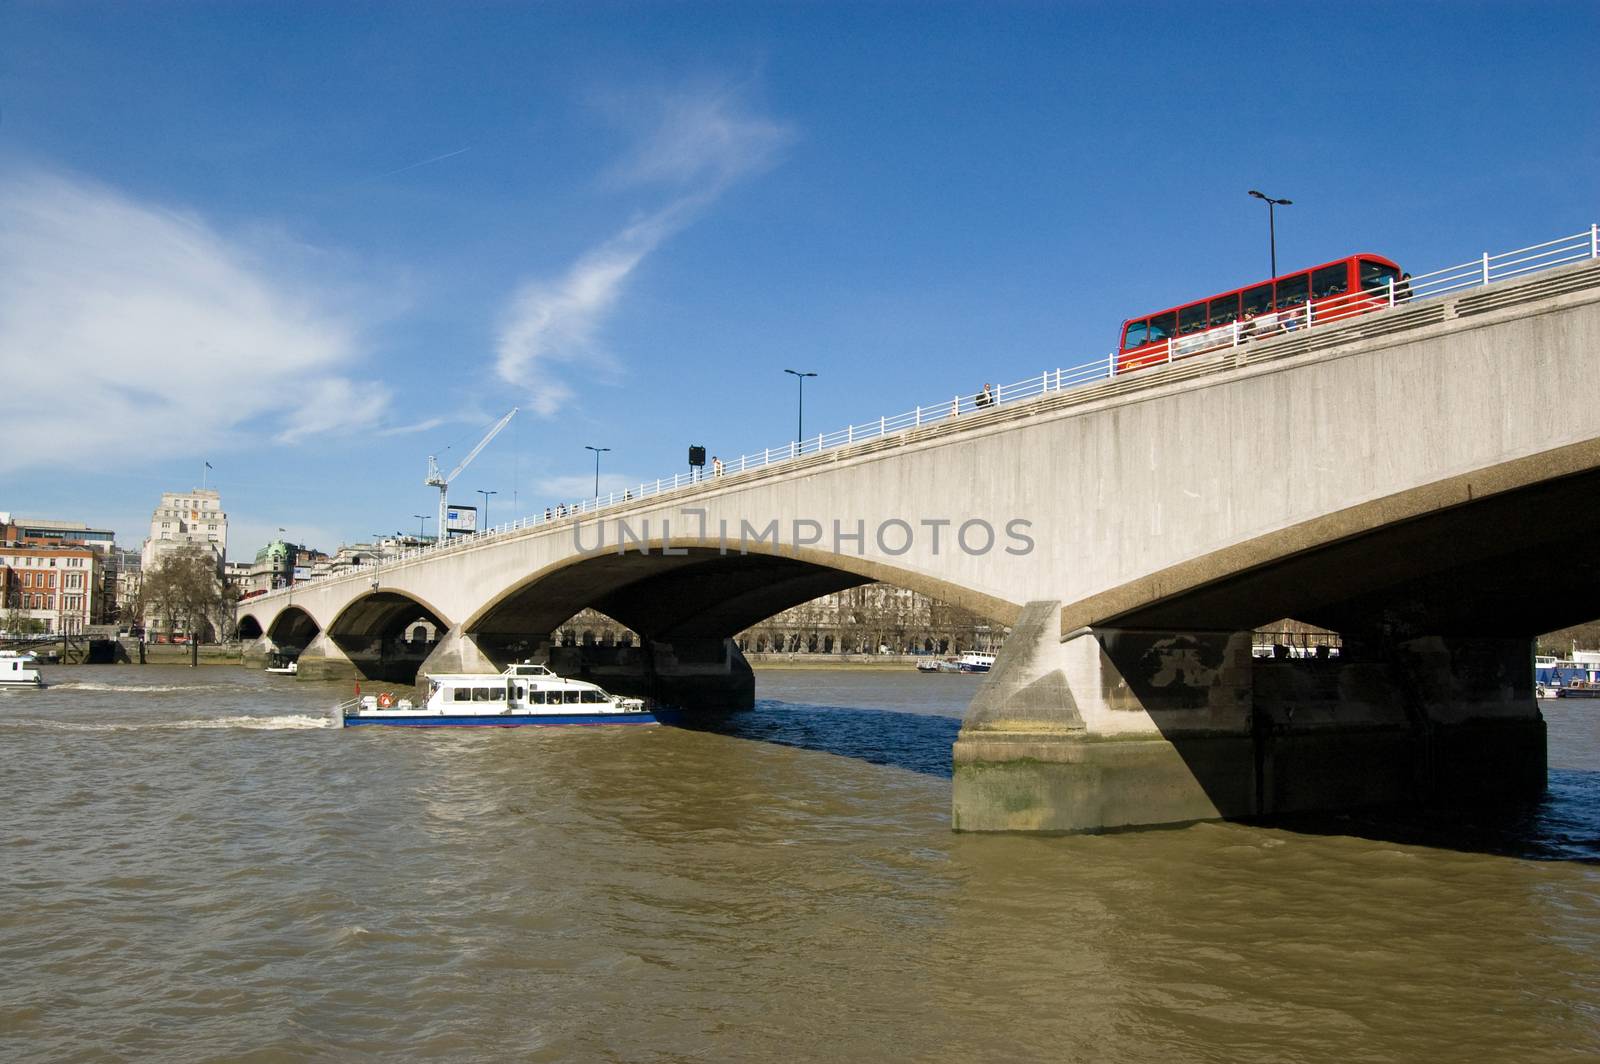 Waterloo Bridge, London by BasPhoto